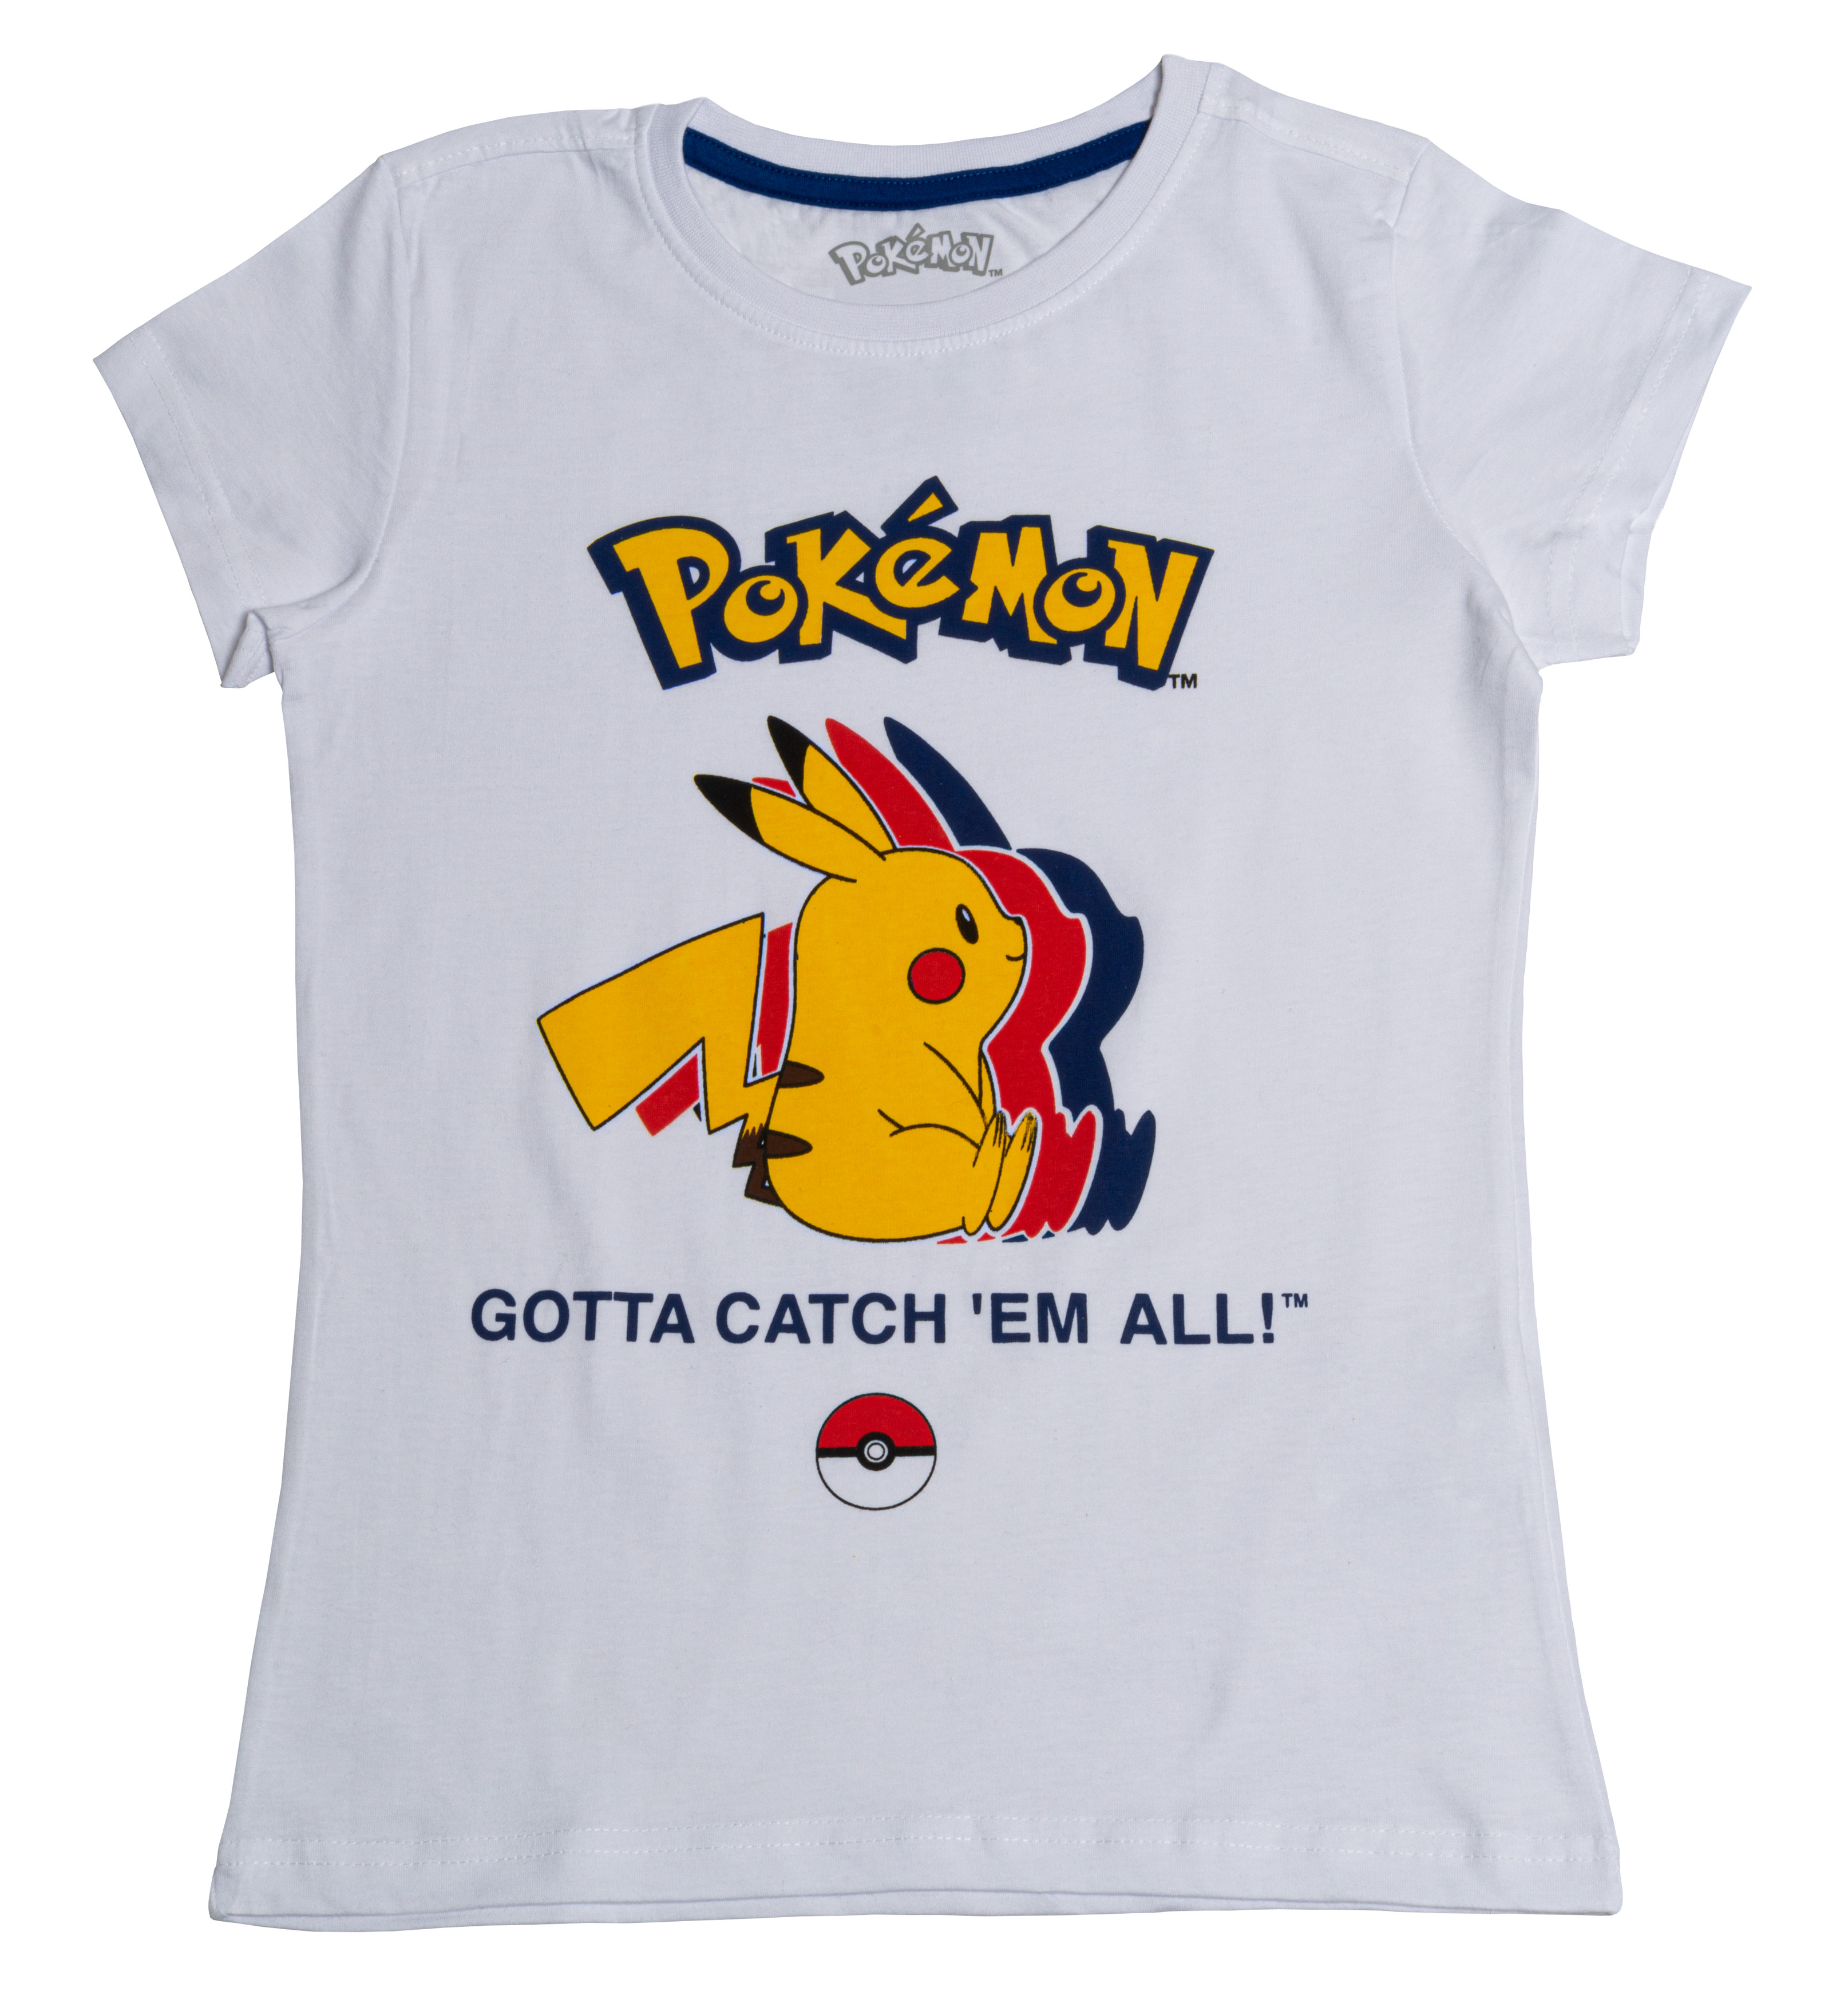 Pokémon - Pika Silhouette - Girls T-Shirt Gr. 110/116